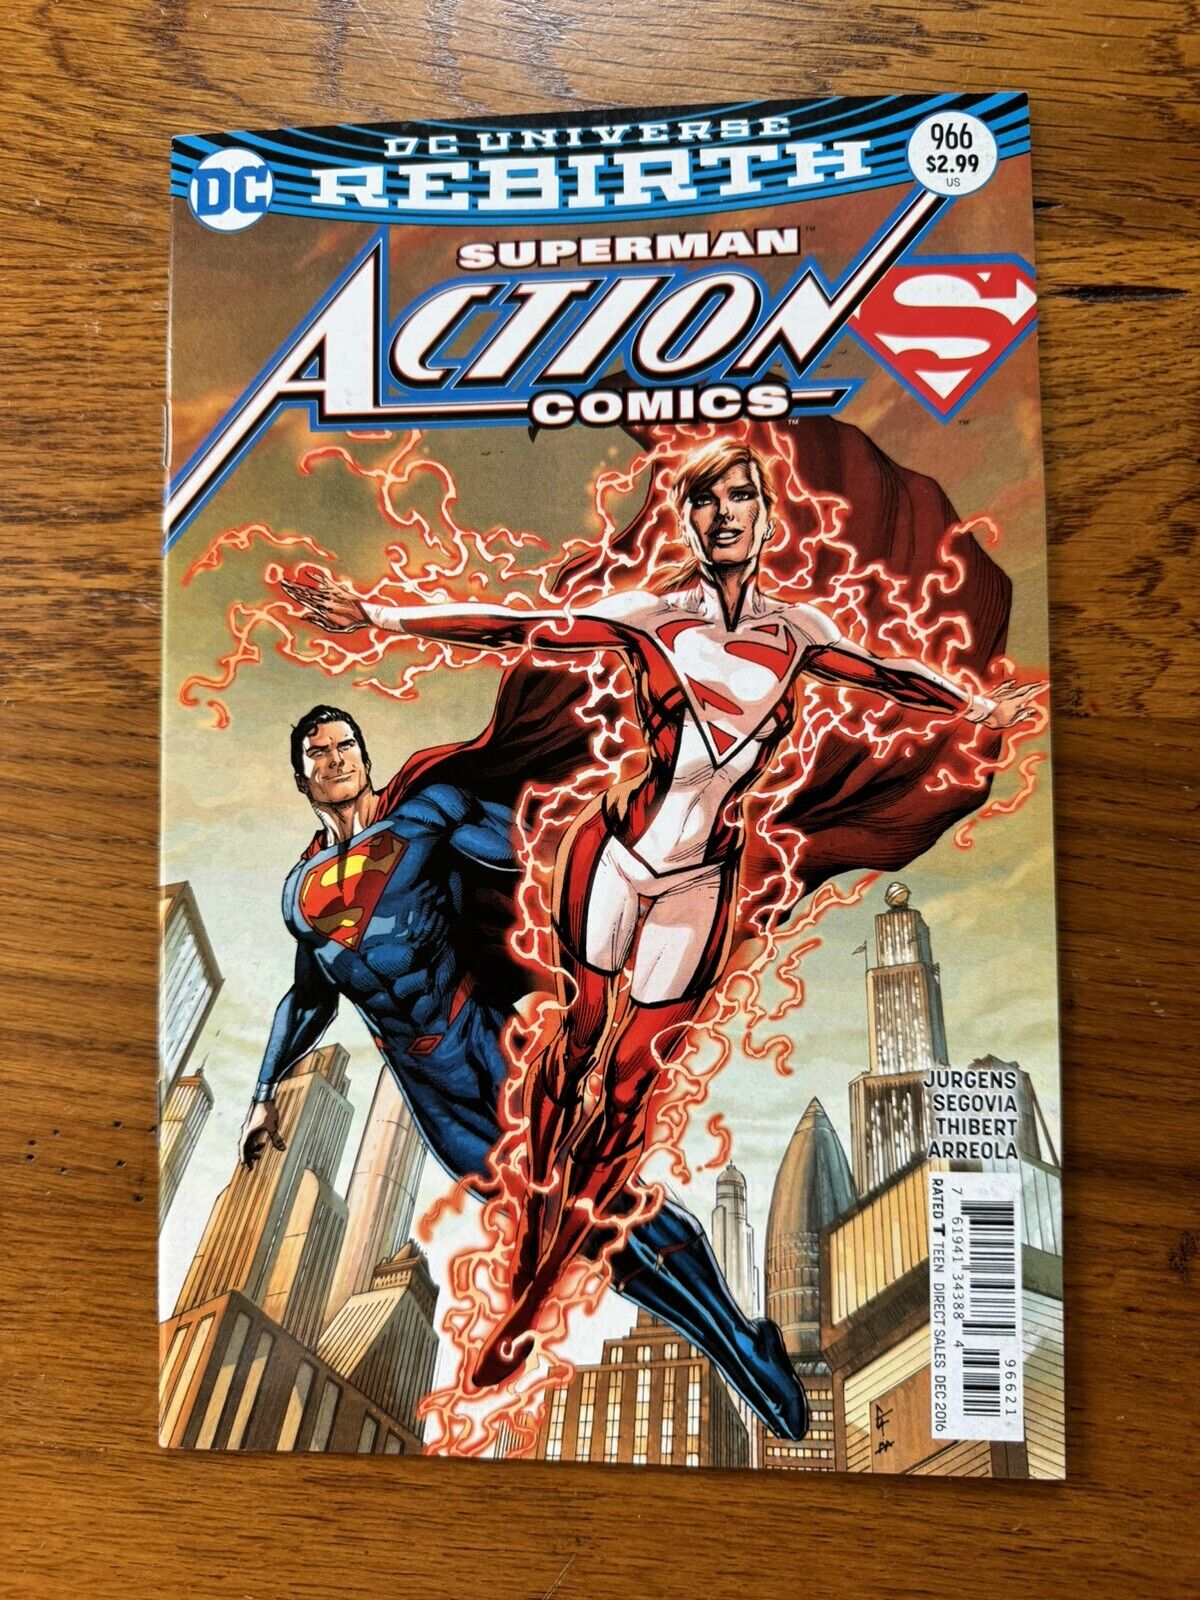 Superman in Action Comics #966 December 2016 DC Comics